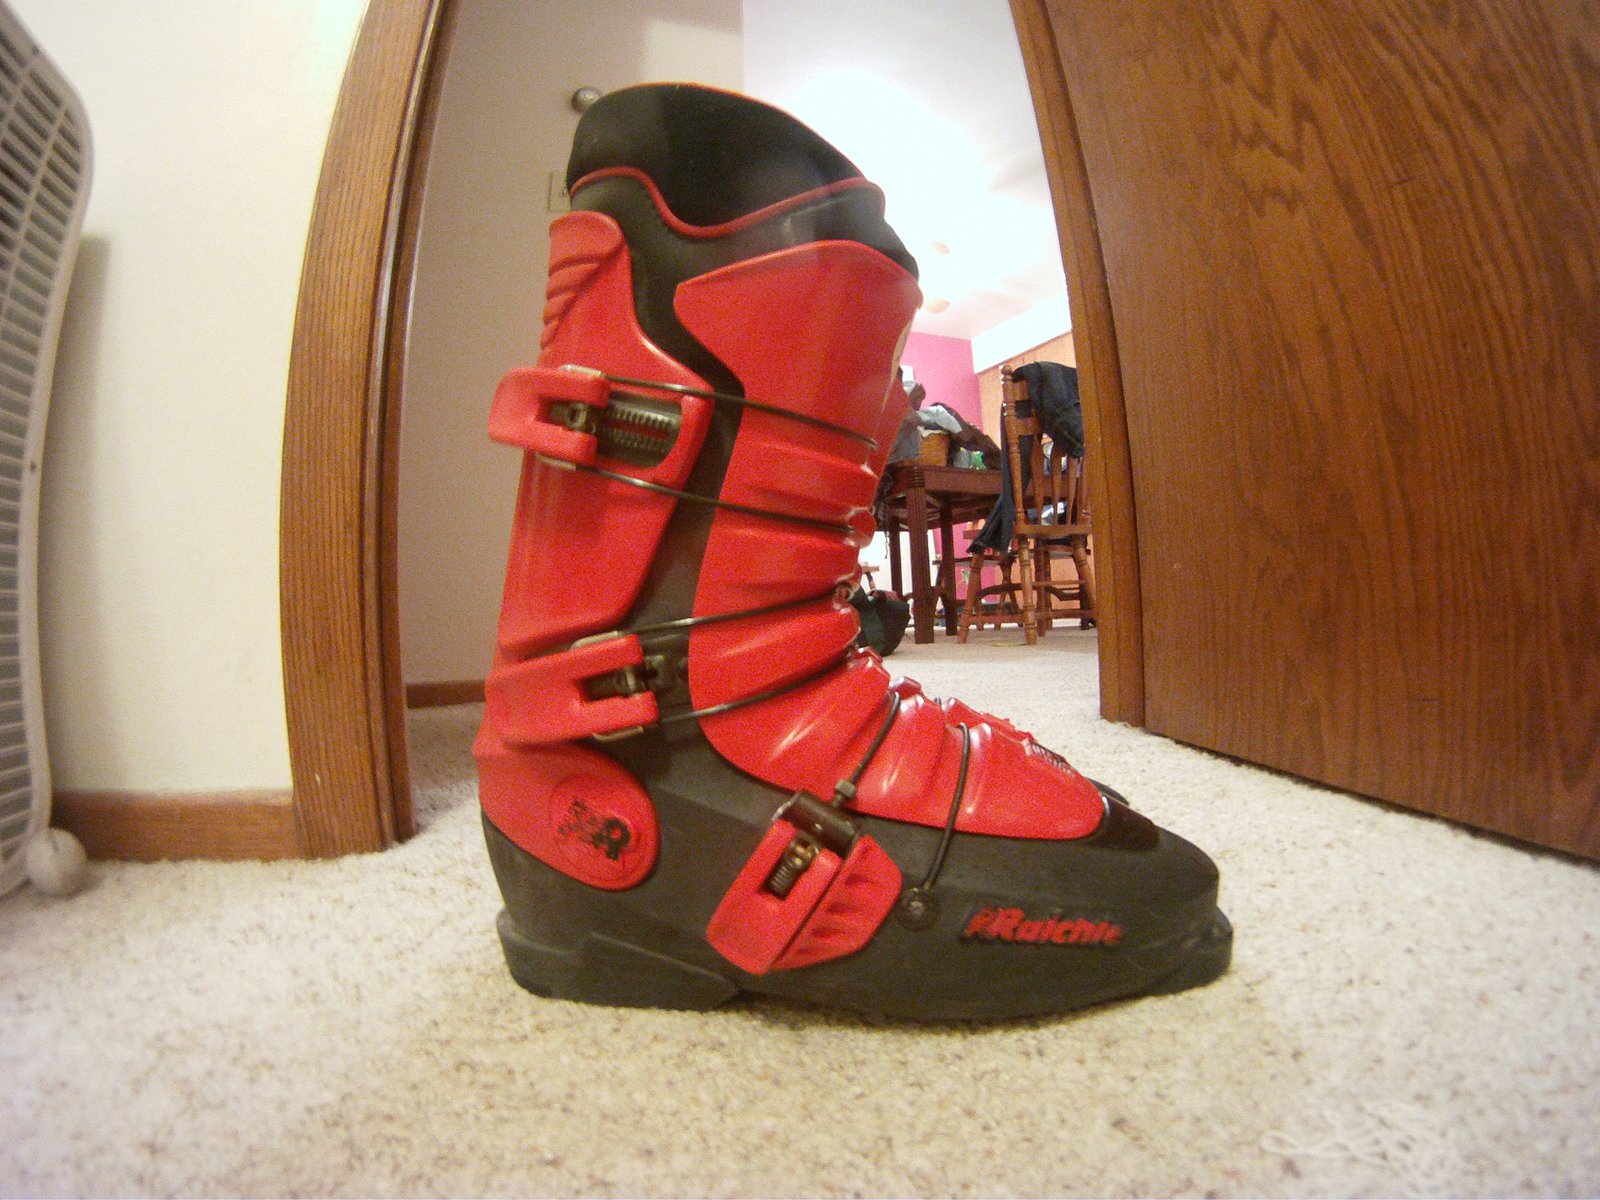 Raichle Ski Boots